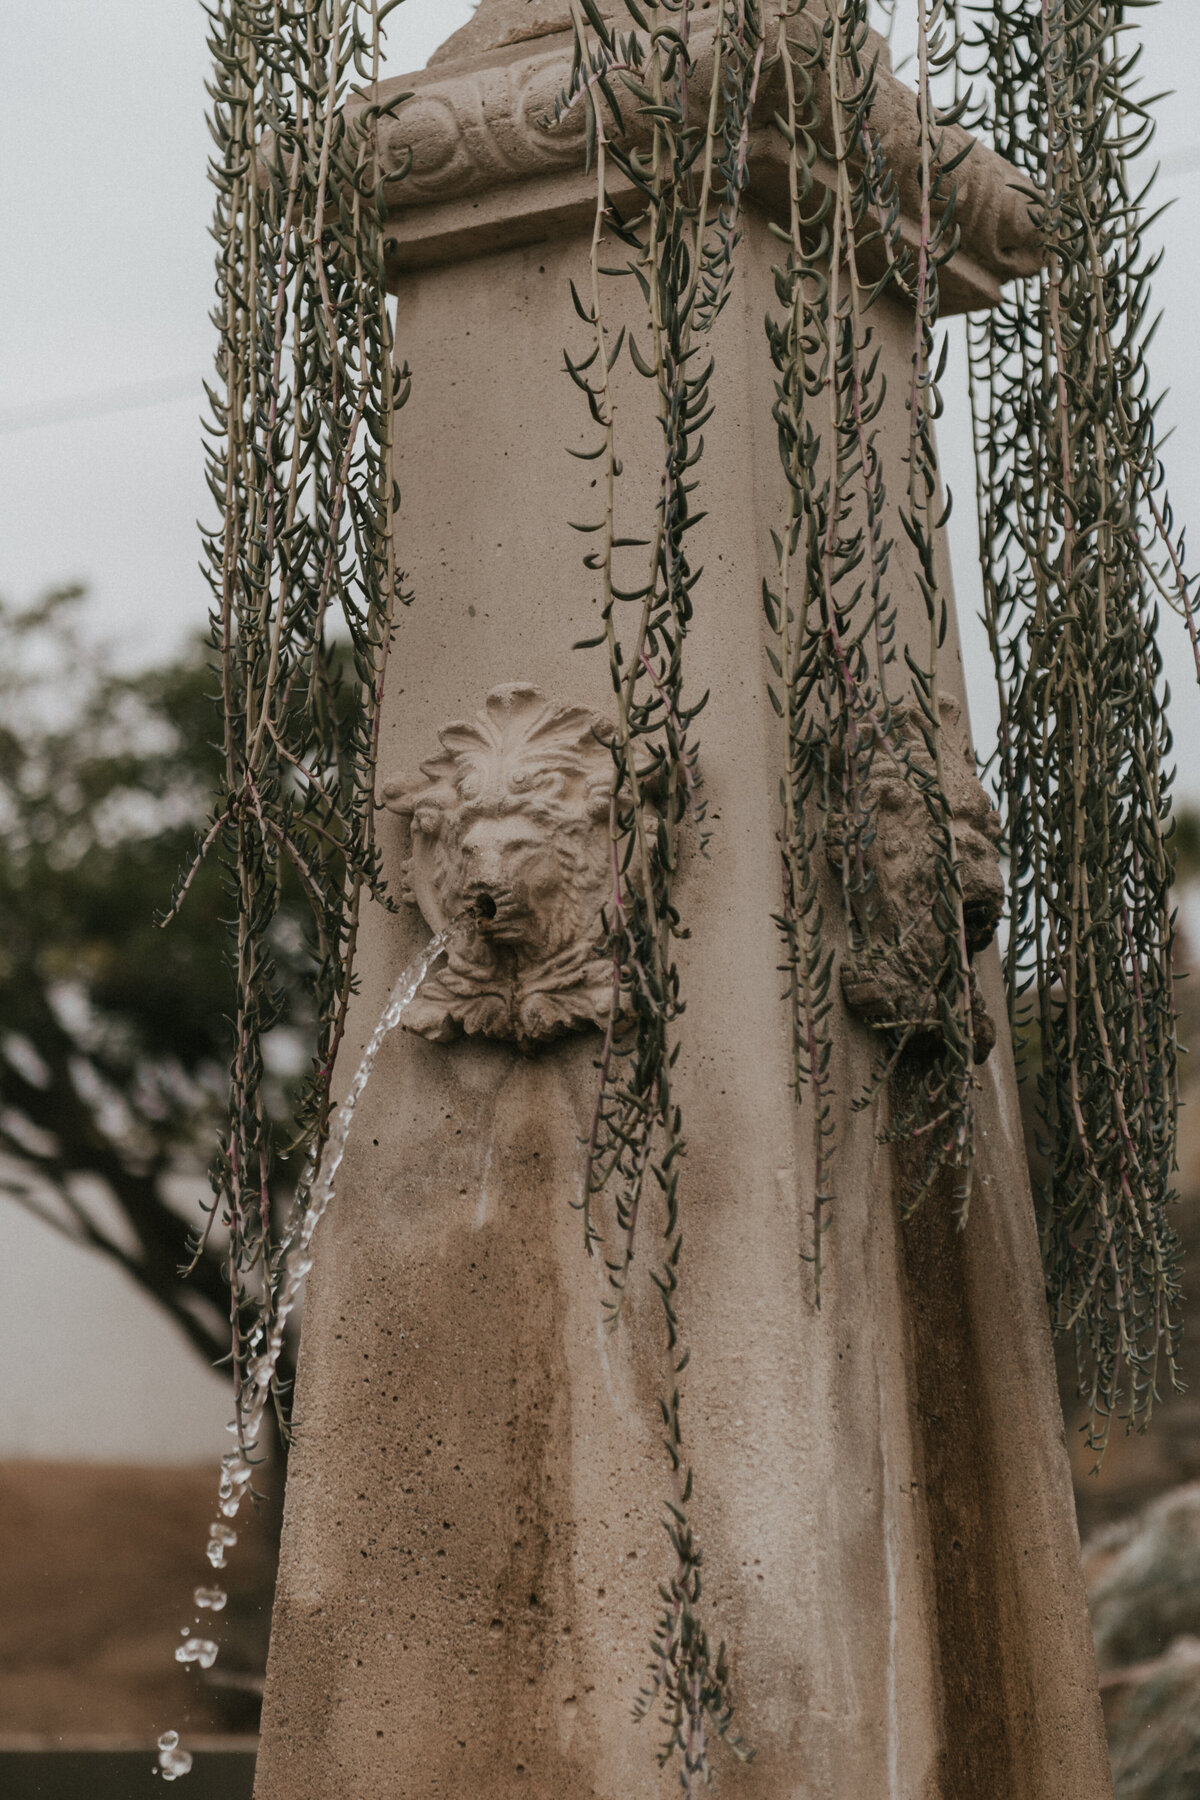 stone garden sculpture and fountain at exclusive destination event venue in mexico